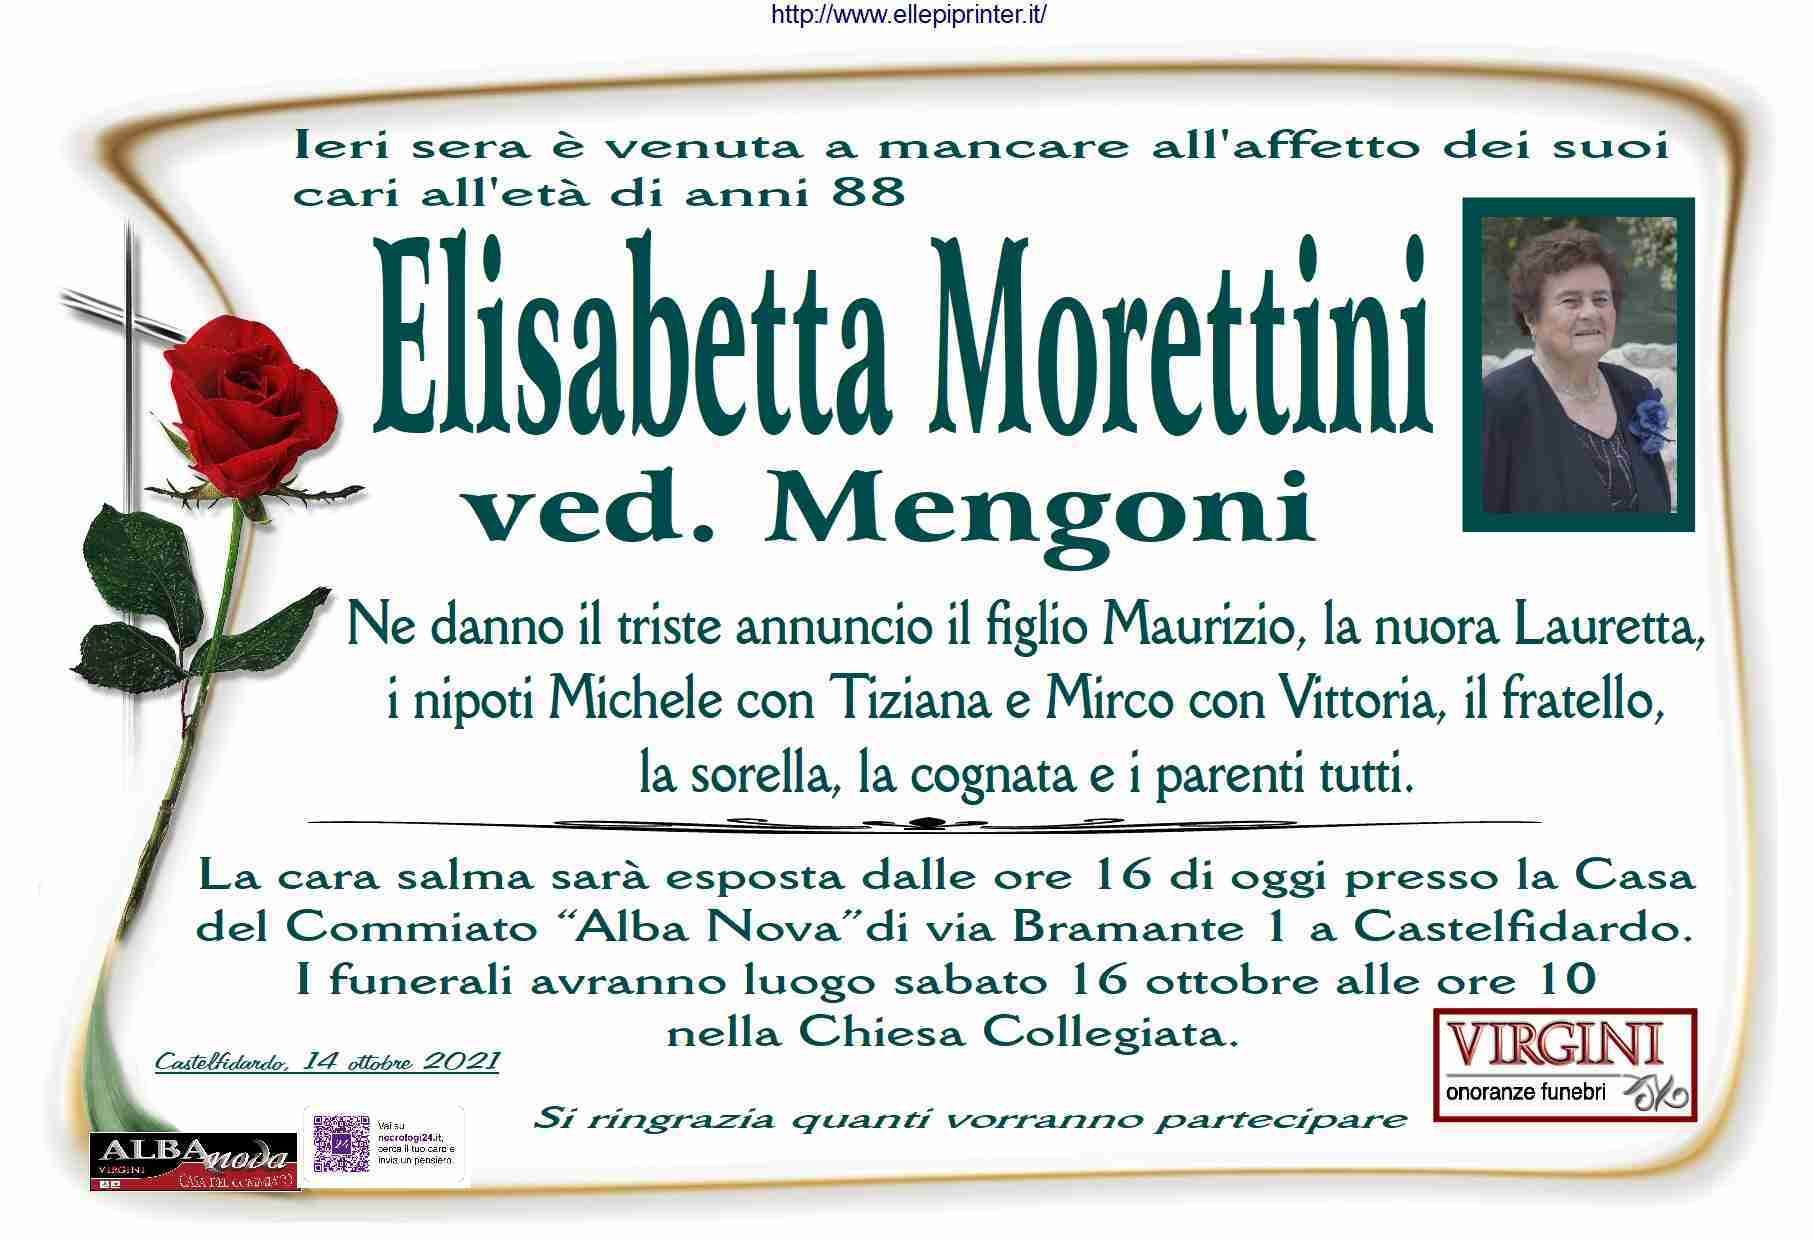 Elisabetta Morettini